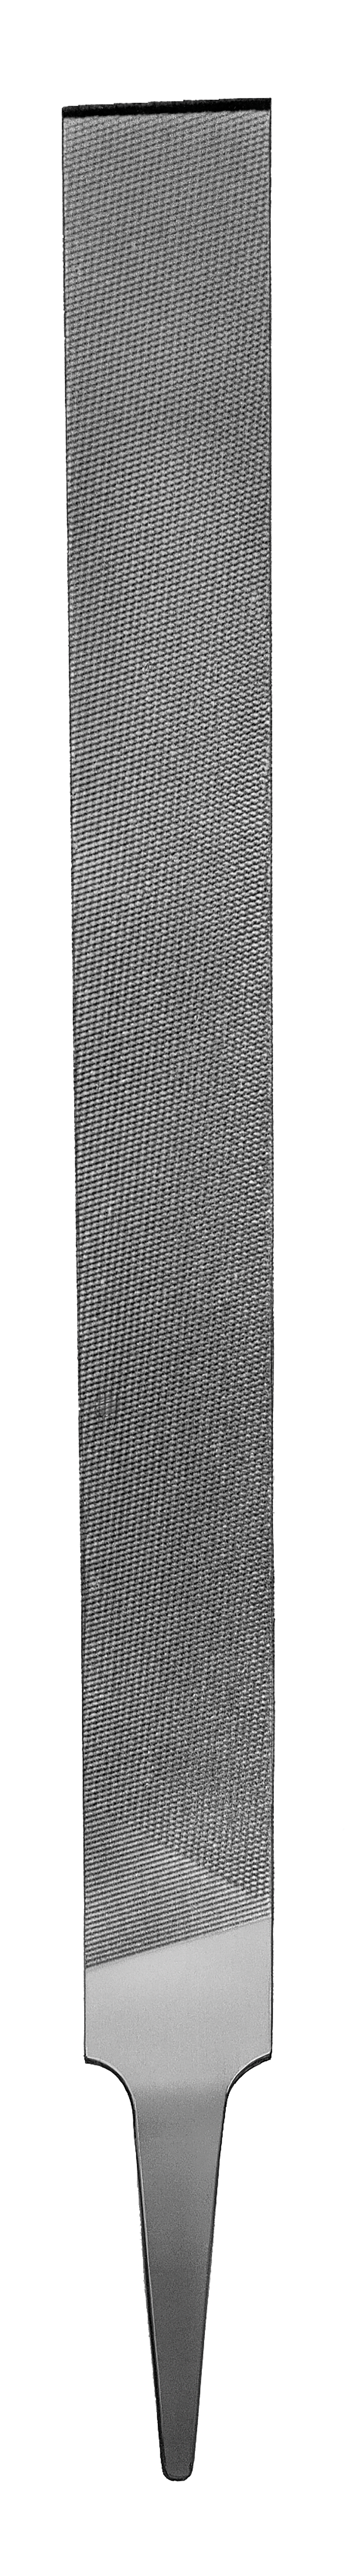 Foto of  Werkplaatsvijlen conform DIN 7261, vorm E, keep 1, 200 mm 